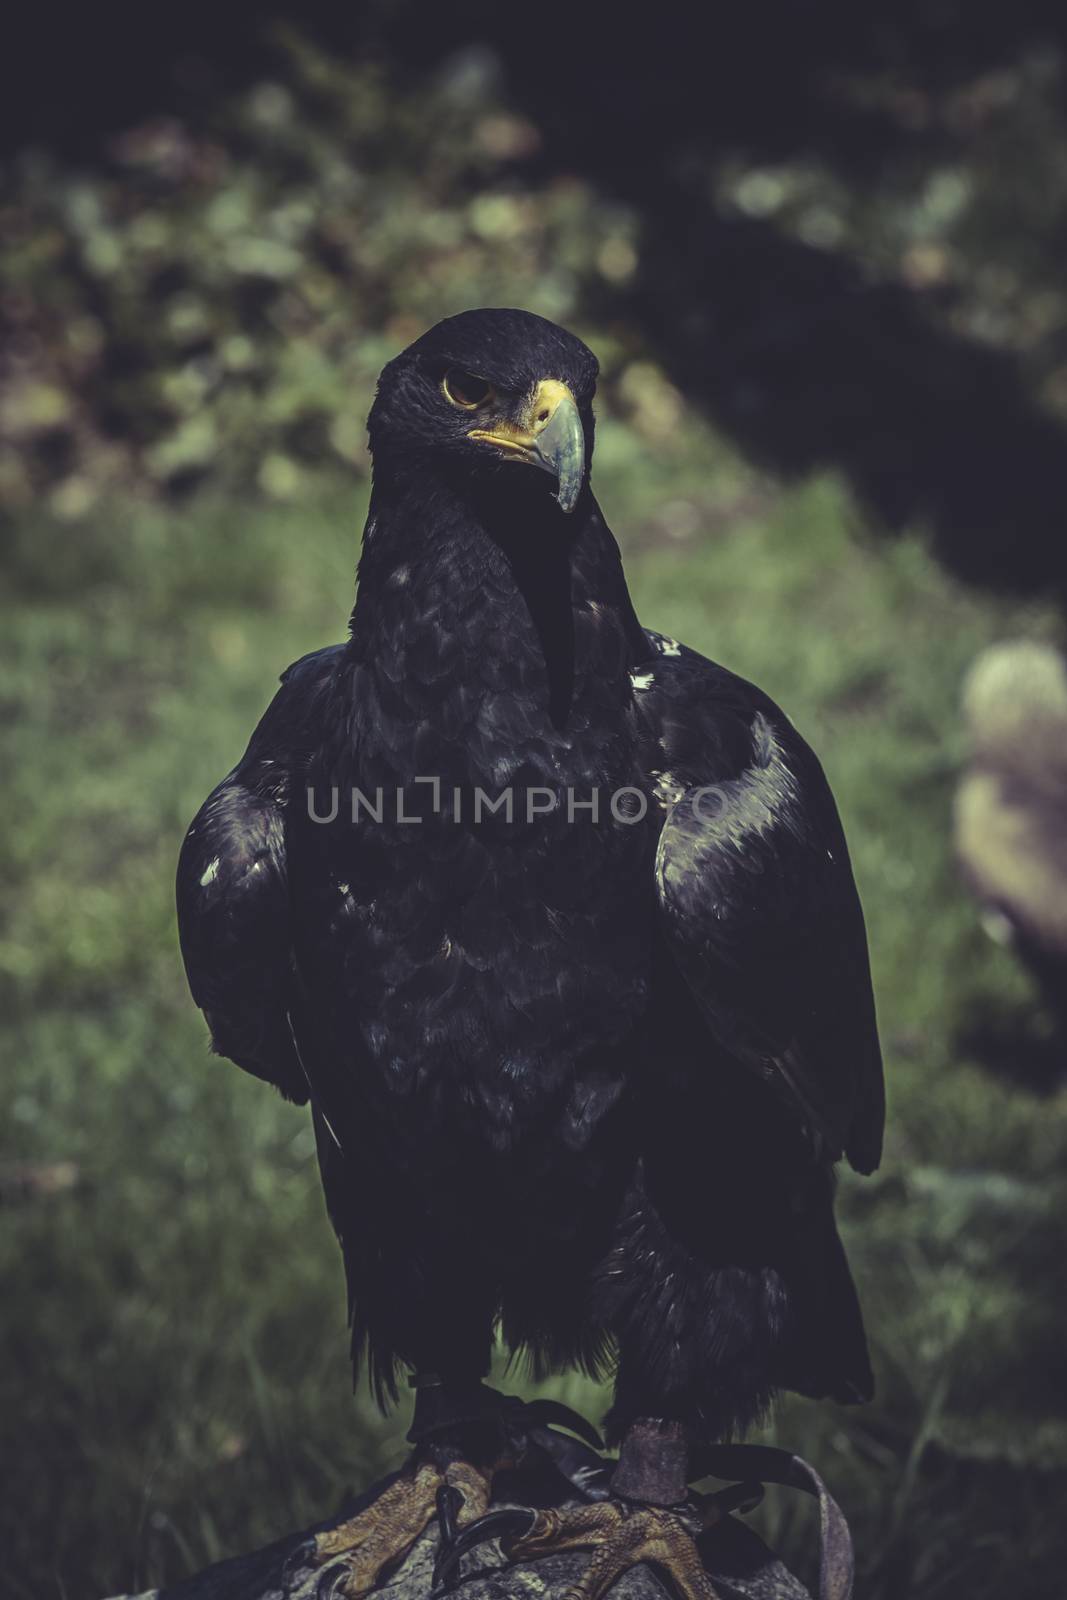 Black eagle with yellow peak